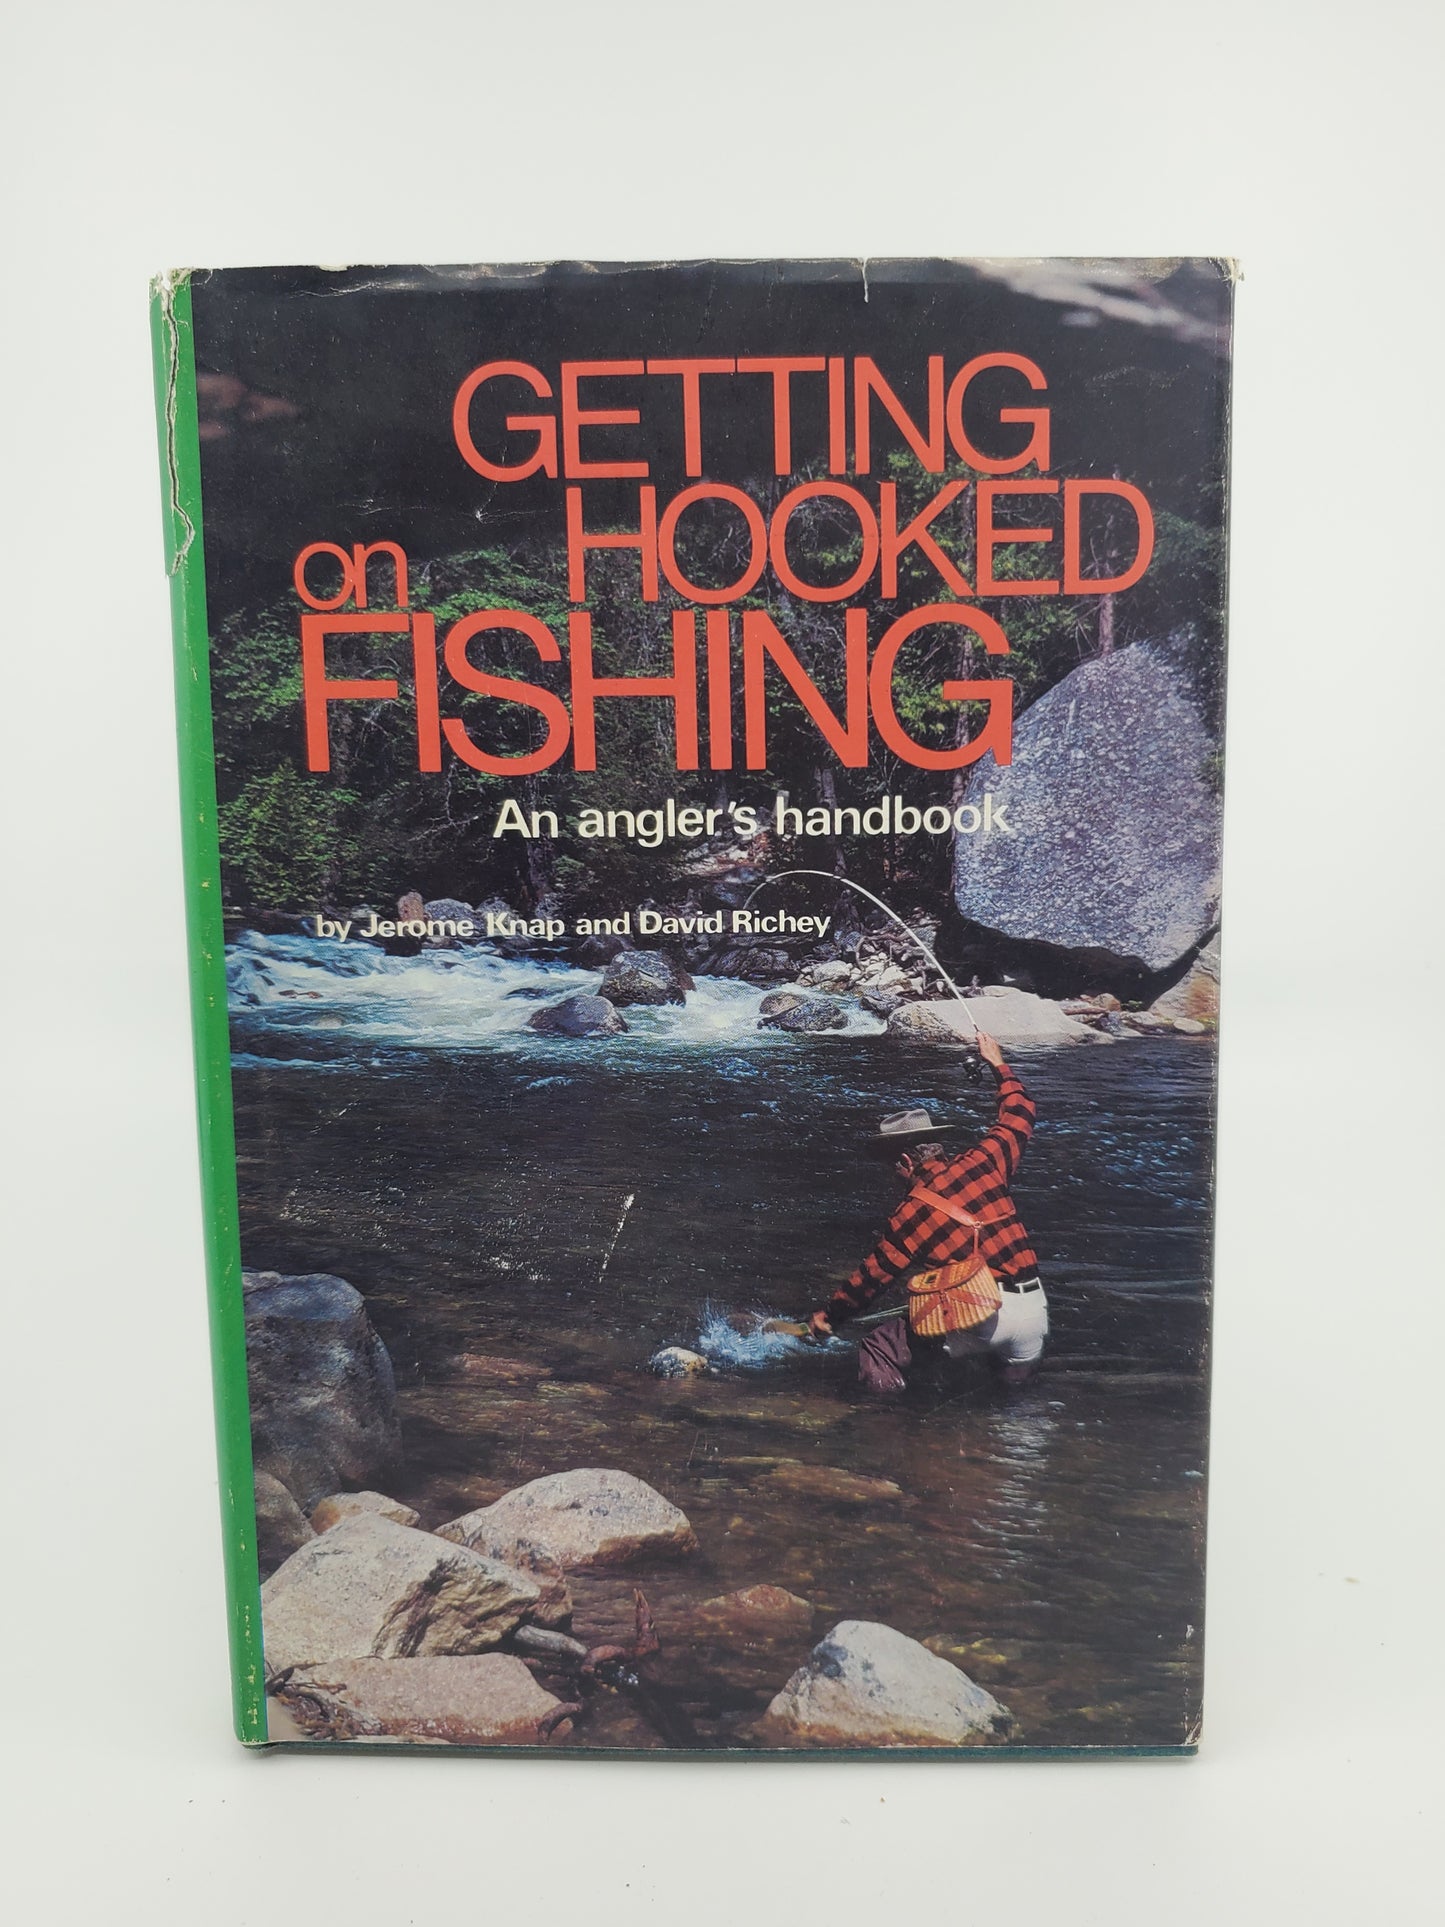 Getting Hooked on Fishing: An Angler's Handbook